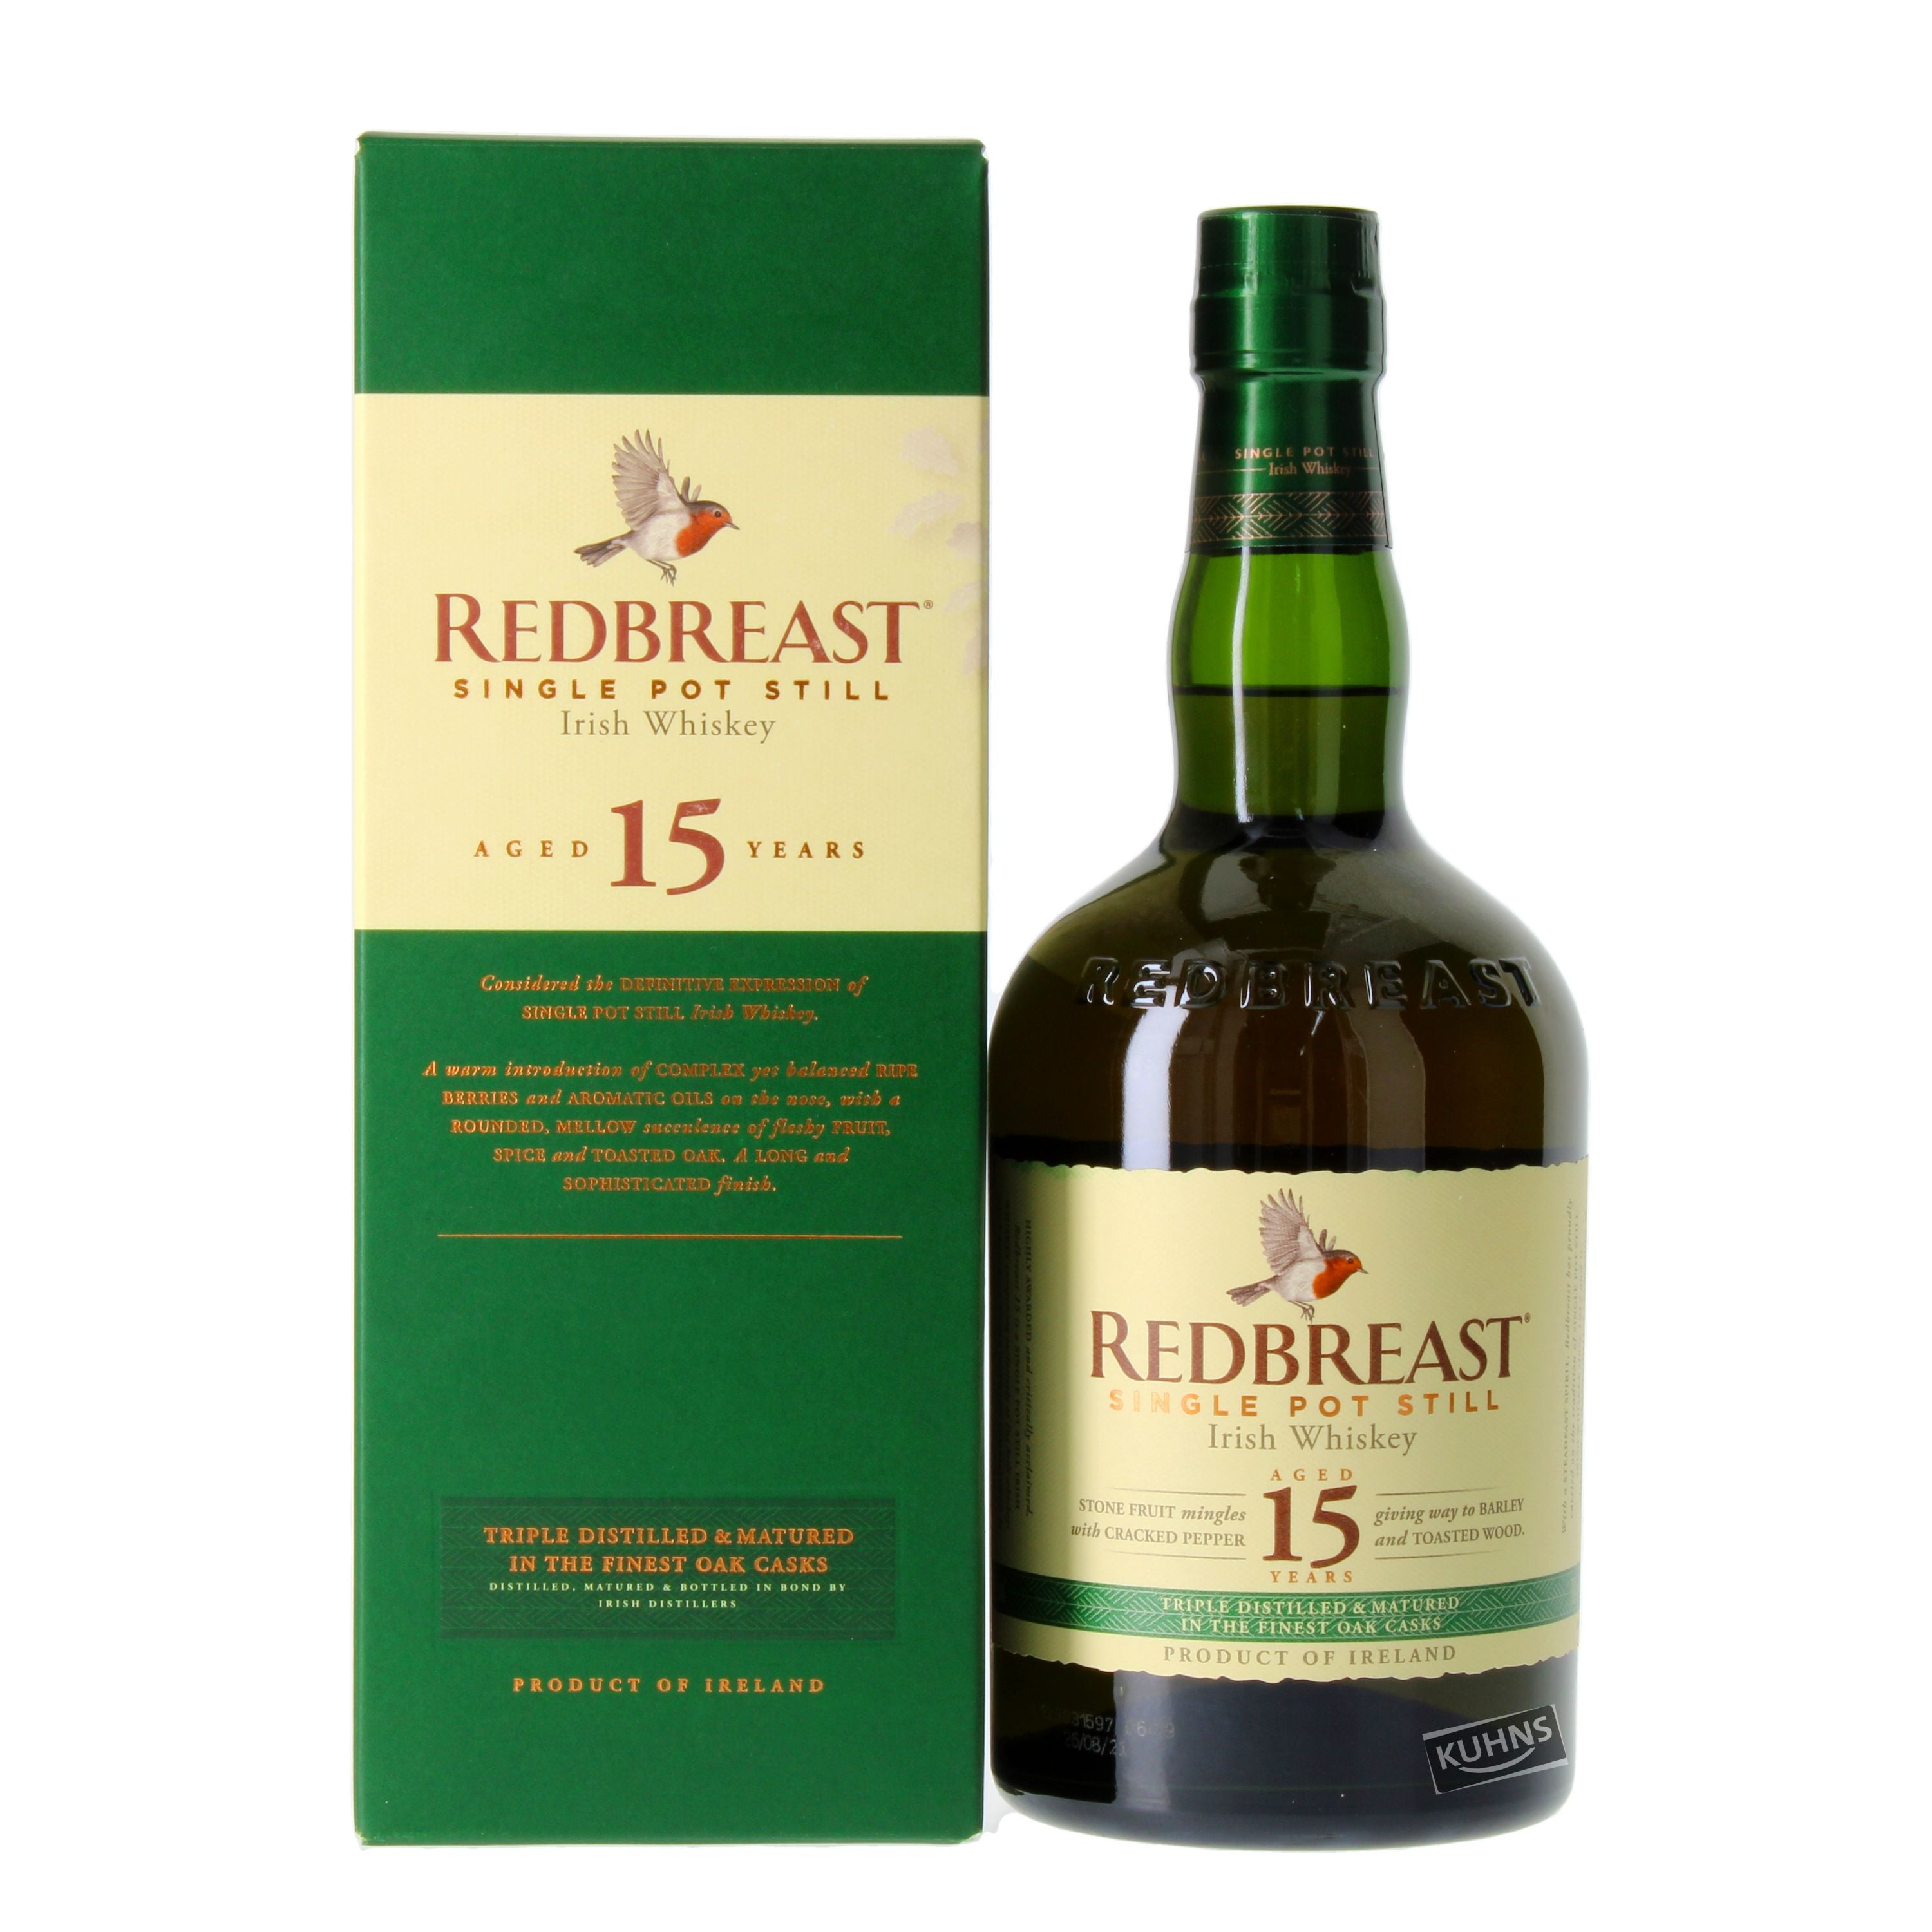 Redbreast 15 Years Single Pot Still Irish Whisky 0,7l, alk. 46 % tilavuudesta